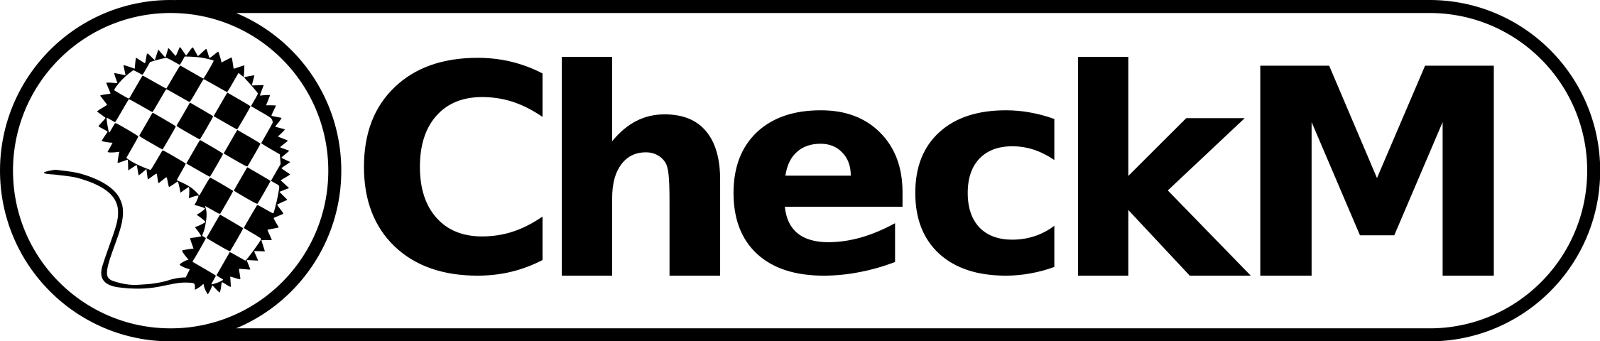 CheckM logo